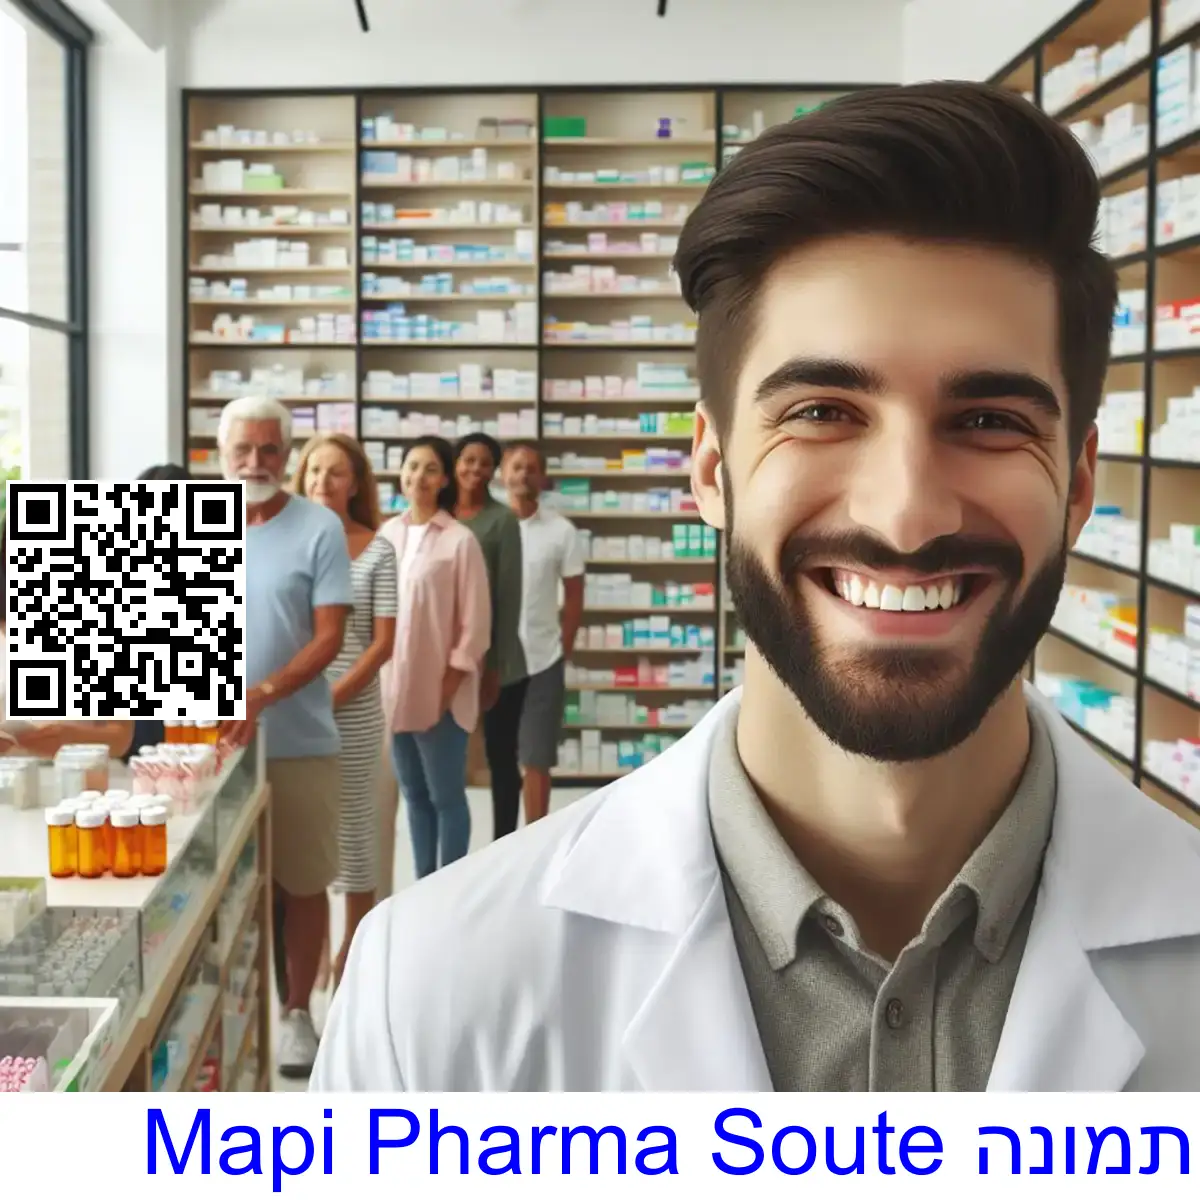 Mapi Pharma Soute